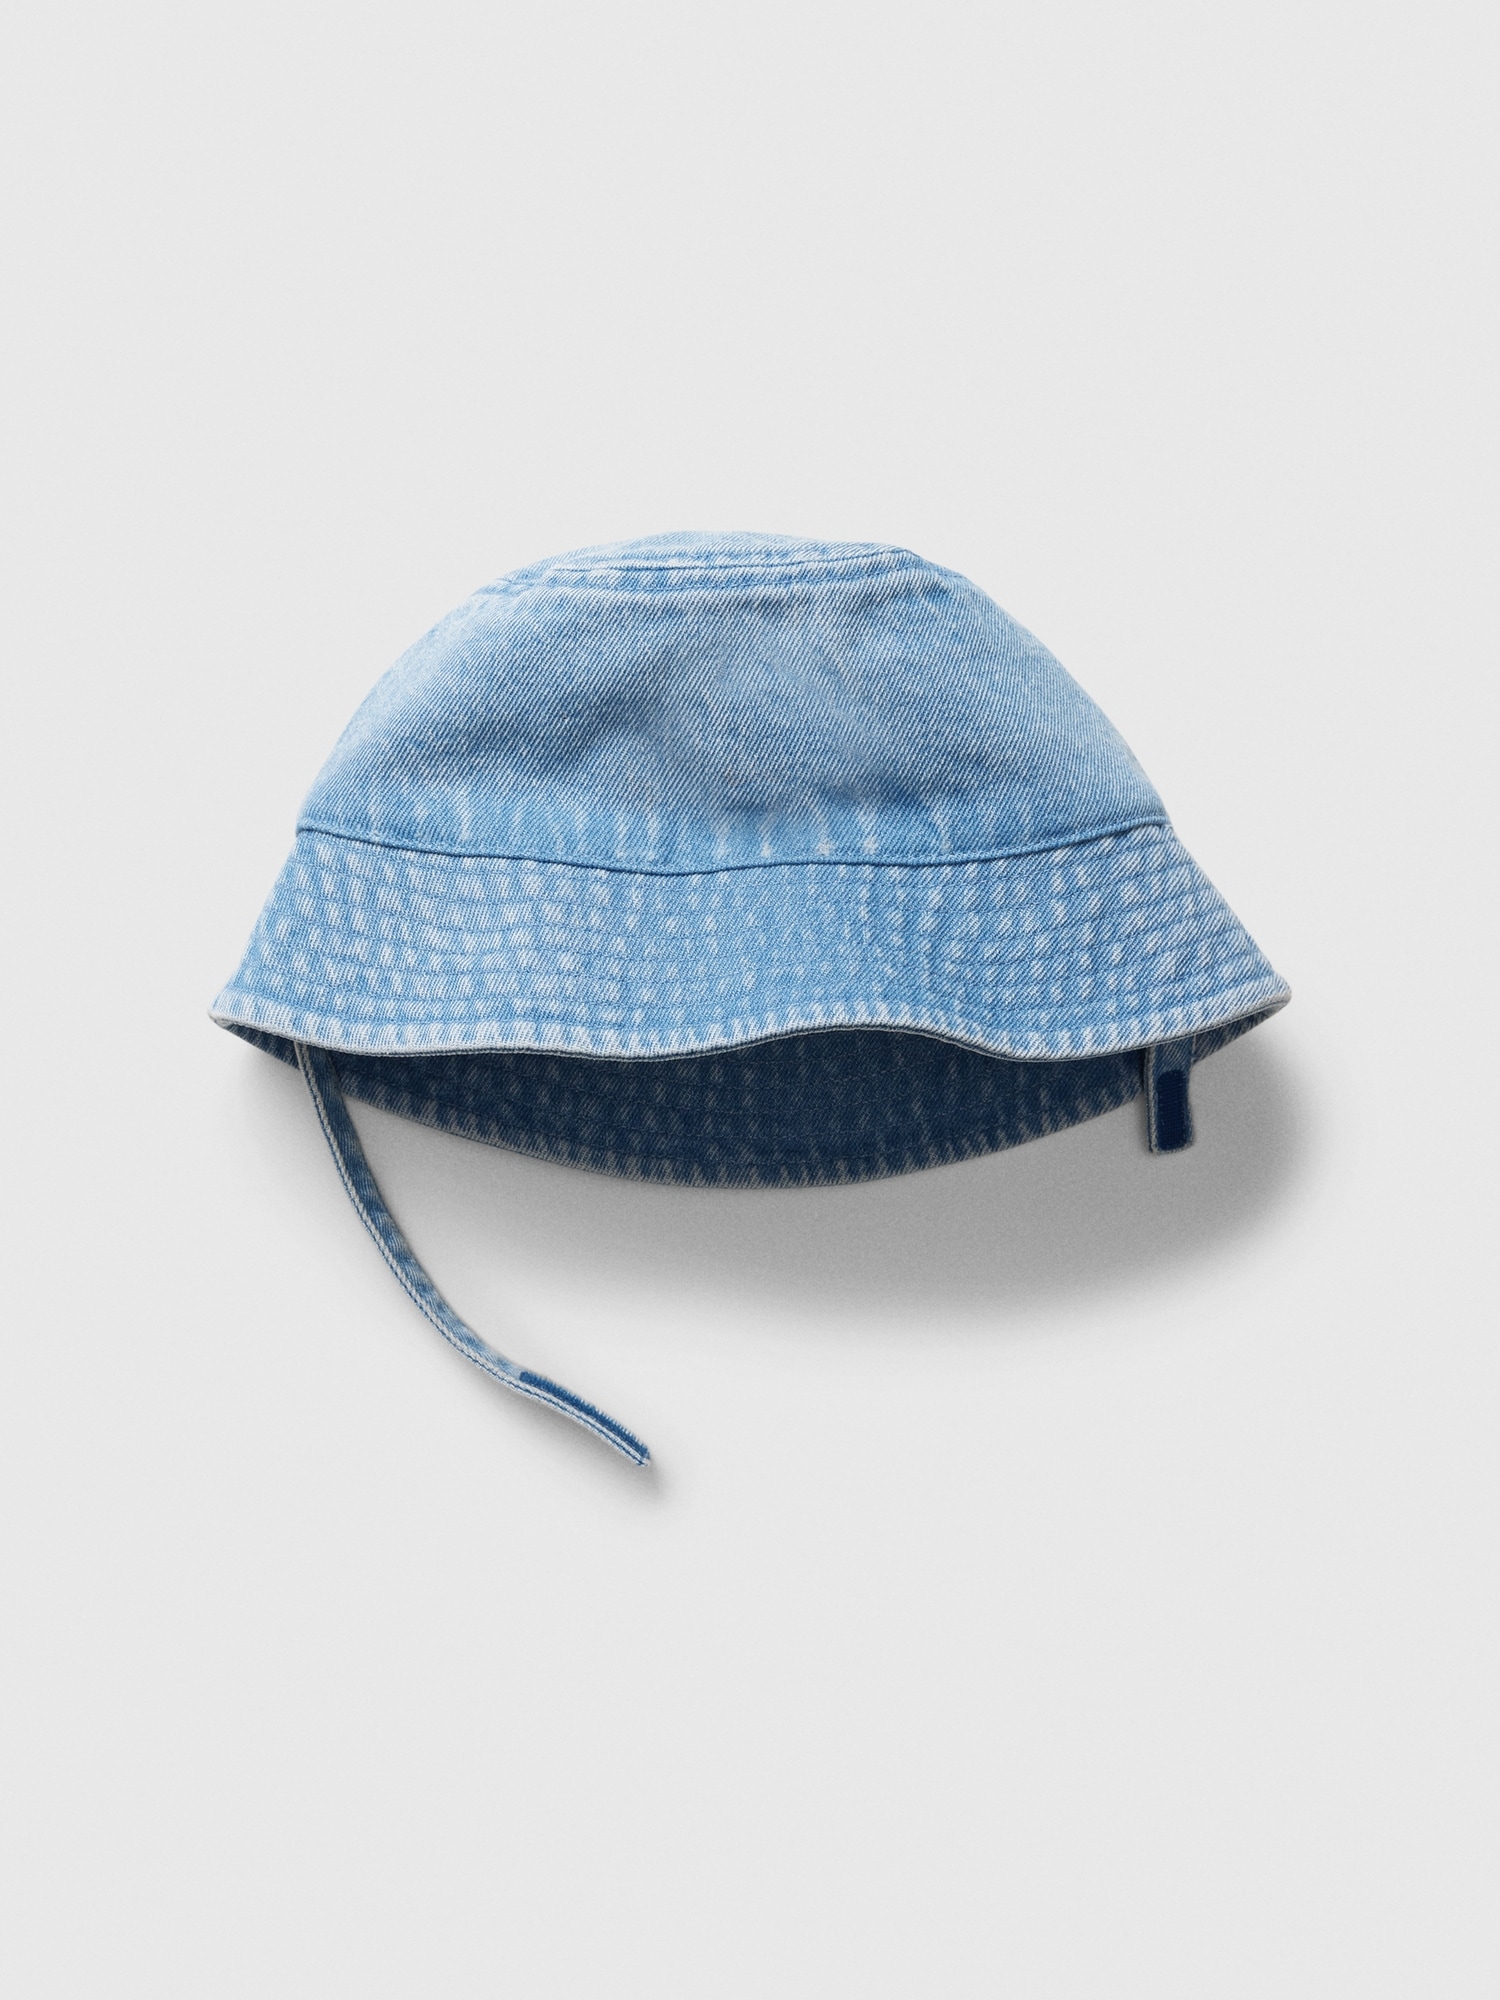 Toddler Sun Hats - $9.99 Sale Designs